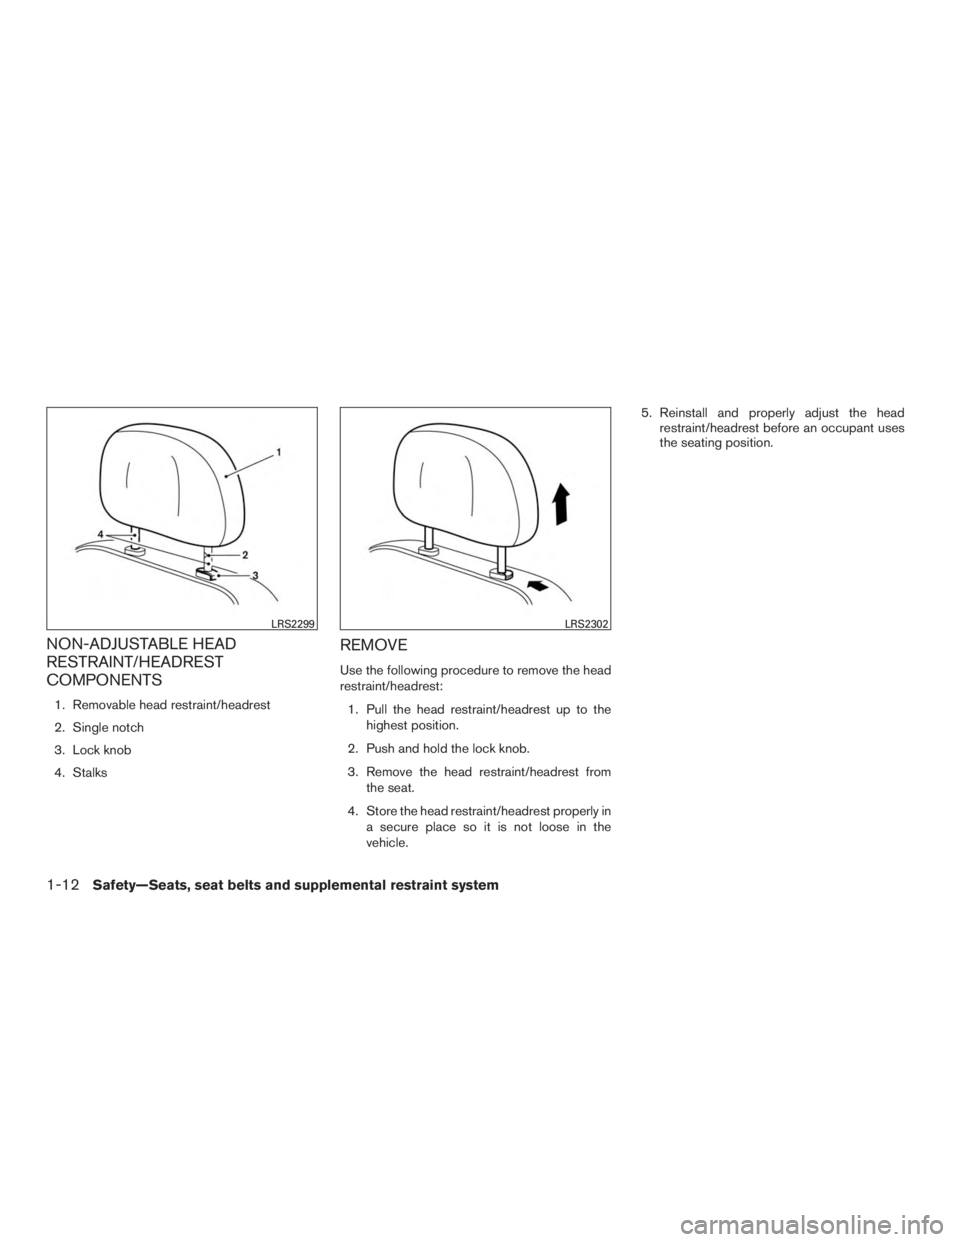 INFINITI QX60 HYBRID 2017  Owners Manual NON-ADJUSTABLE HEAD
RESTRAINT/HEADREST
COMPONENTS
1. Removable head restraint/headrest
2. Single notch
3. Lock knob
4. Stalks
REMOVE
Use the following procedure to remove the head
restraint/headrest:1